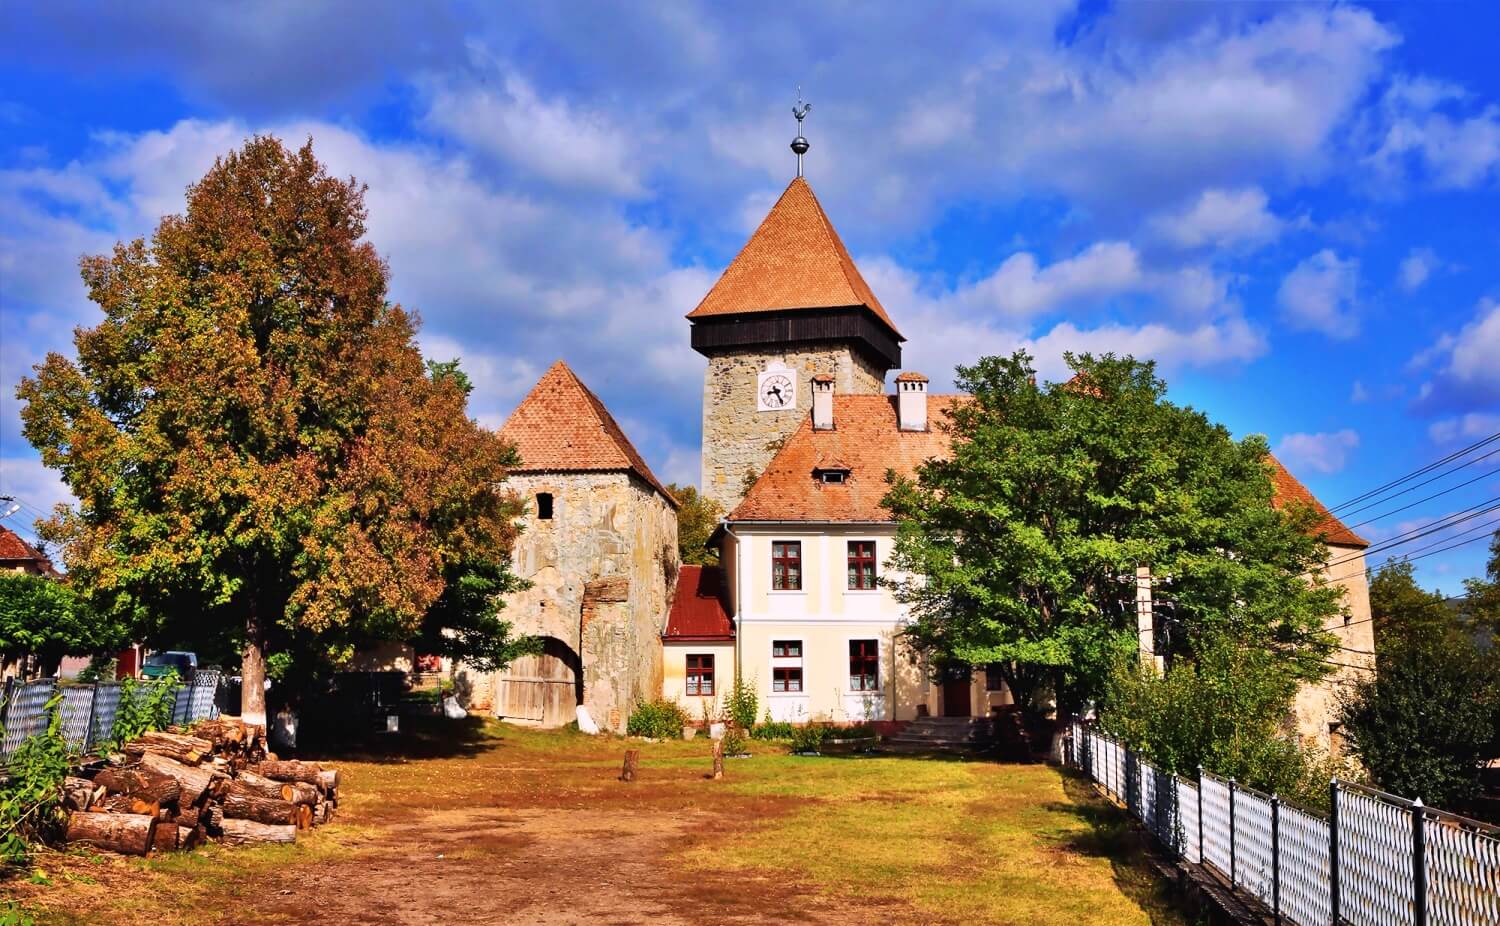 Drăuşeni fortified church